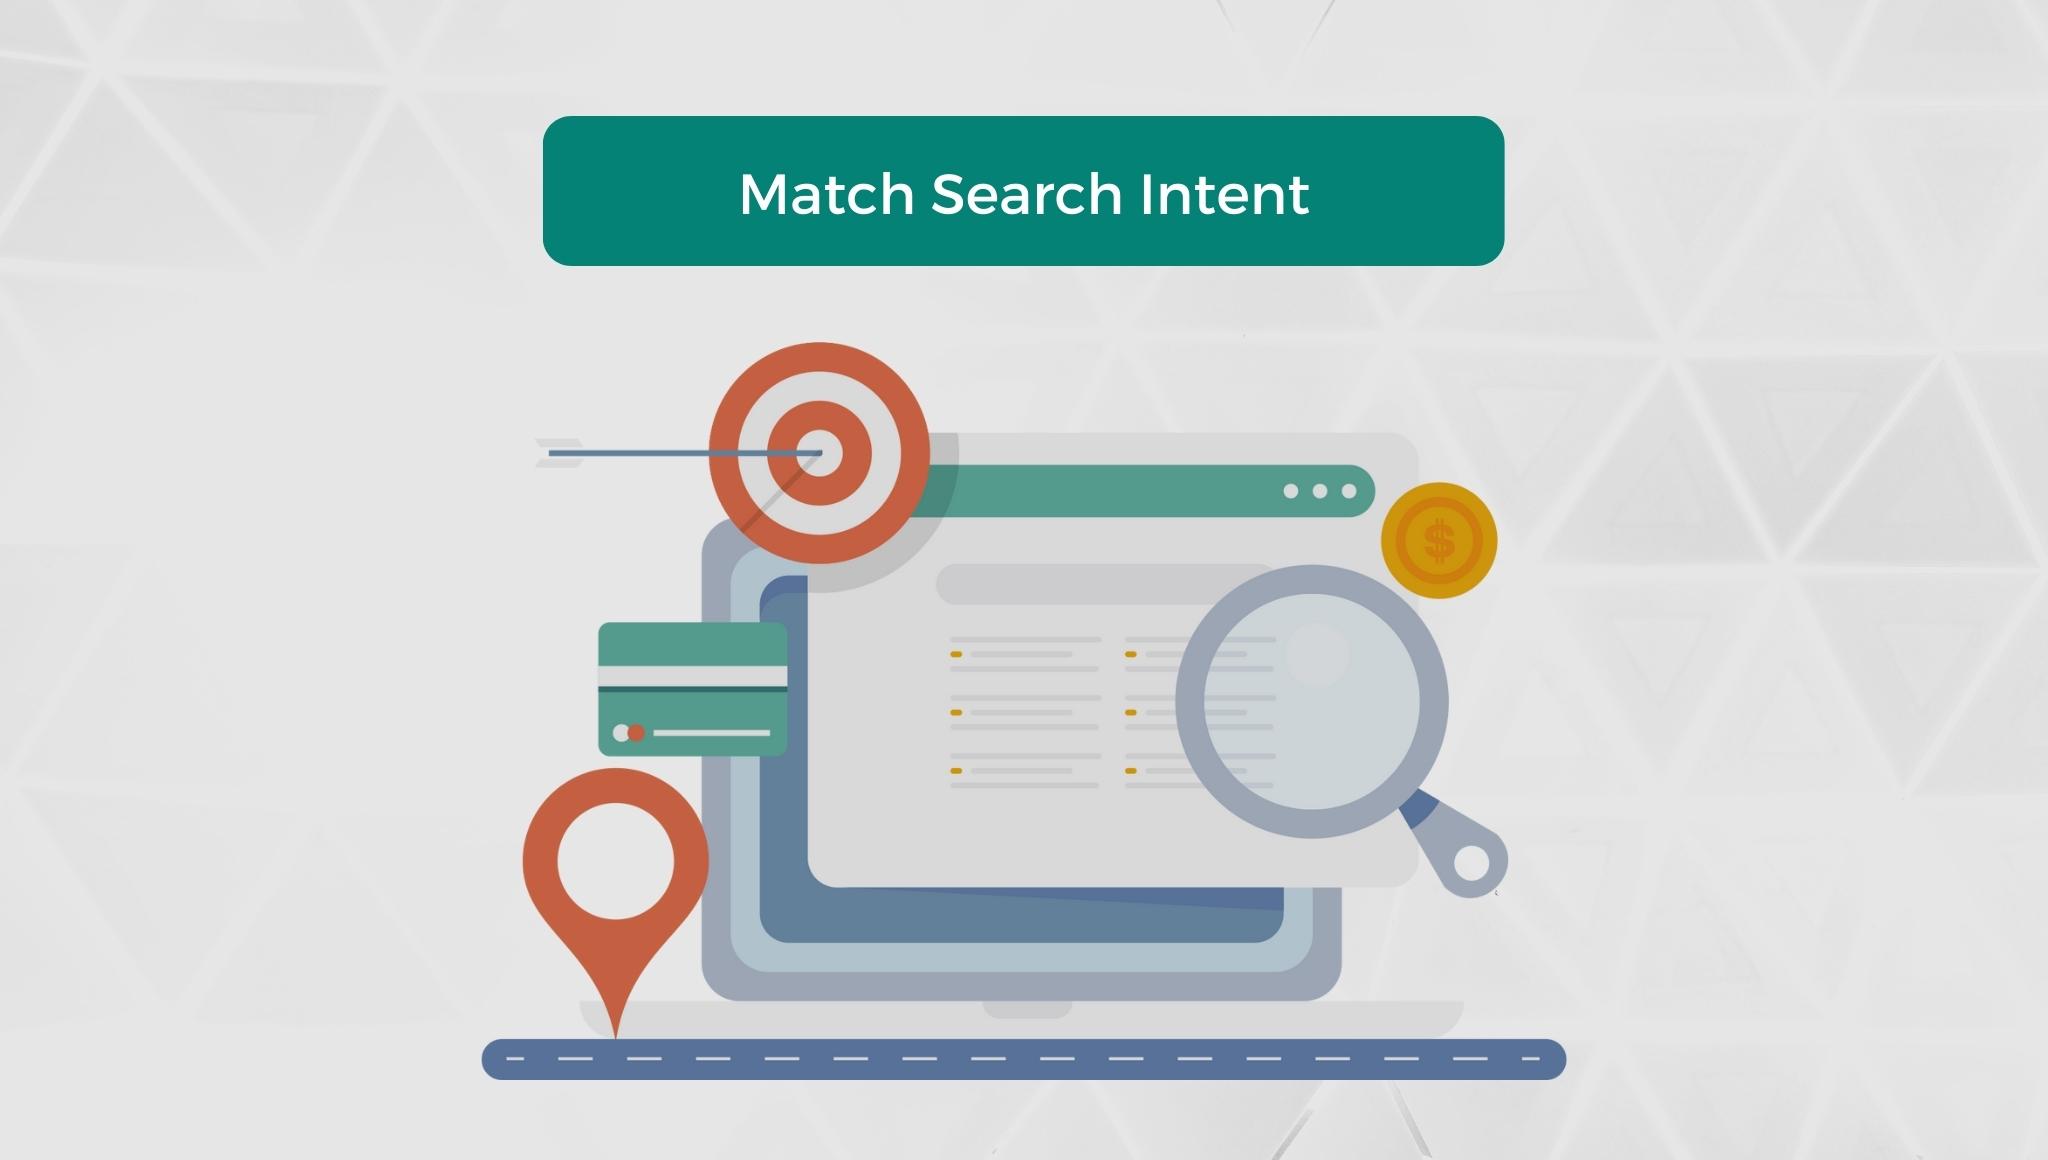  Match Search Intent